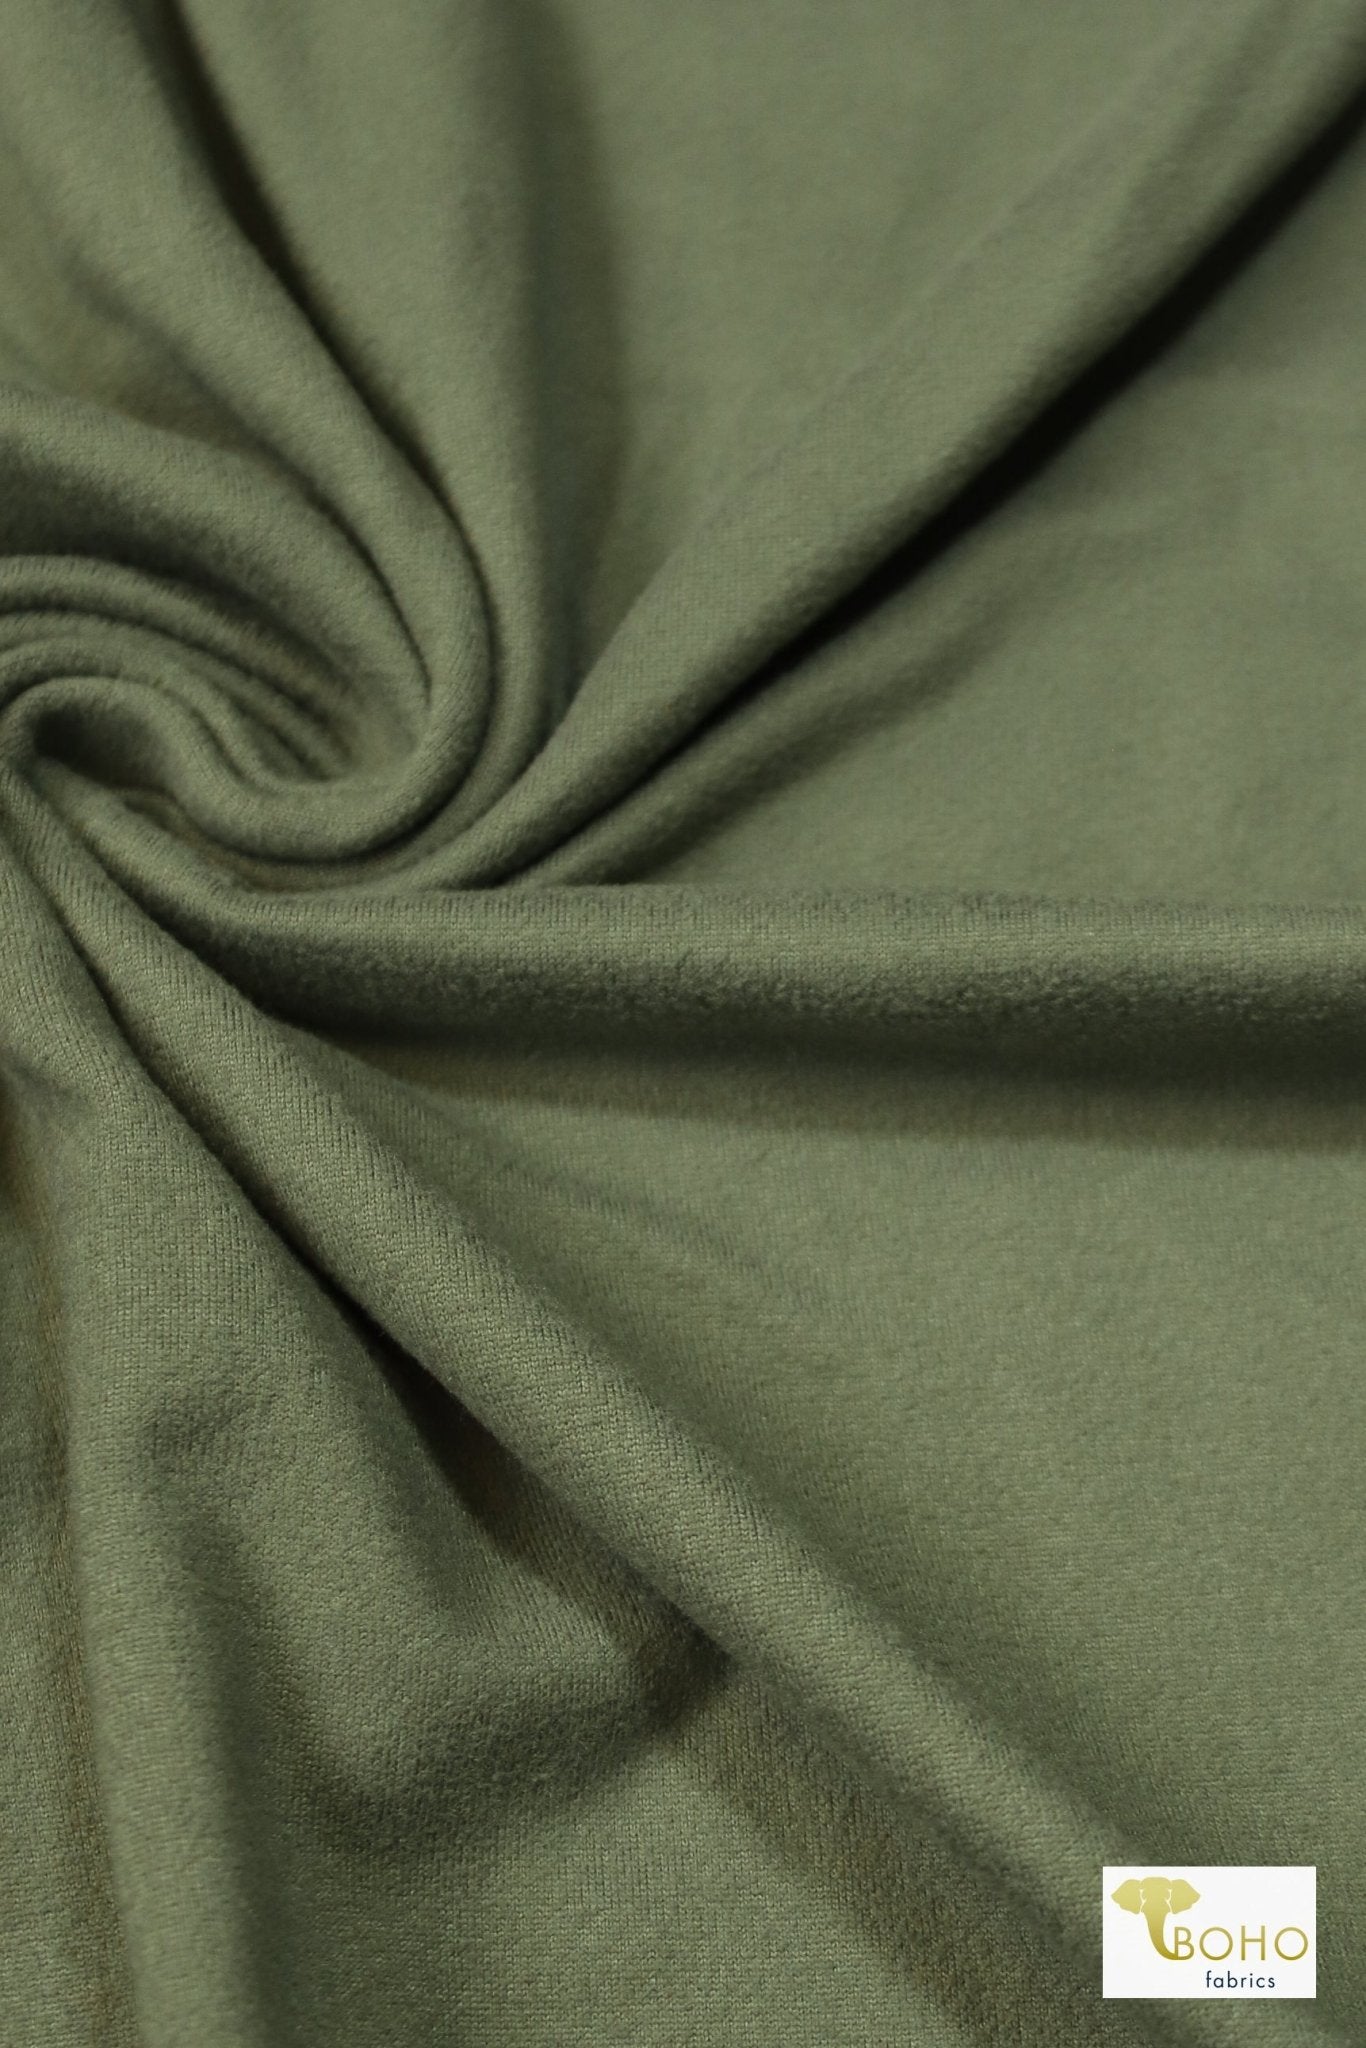 Sage Green, Double Brushed Poly Solid Knit - Boho Fabrics